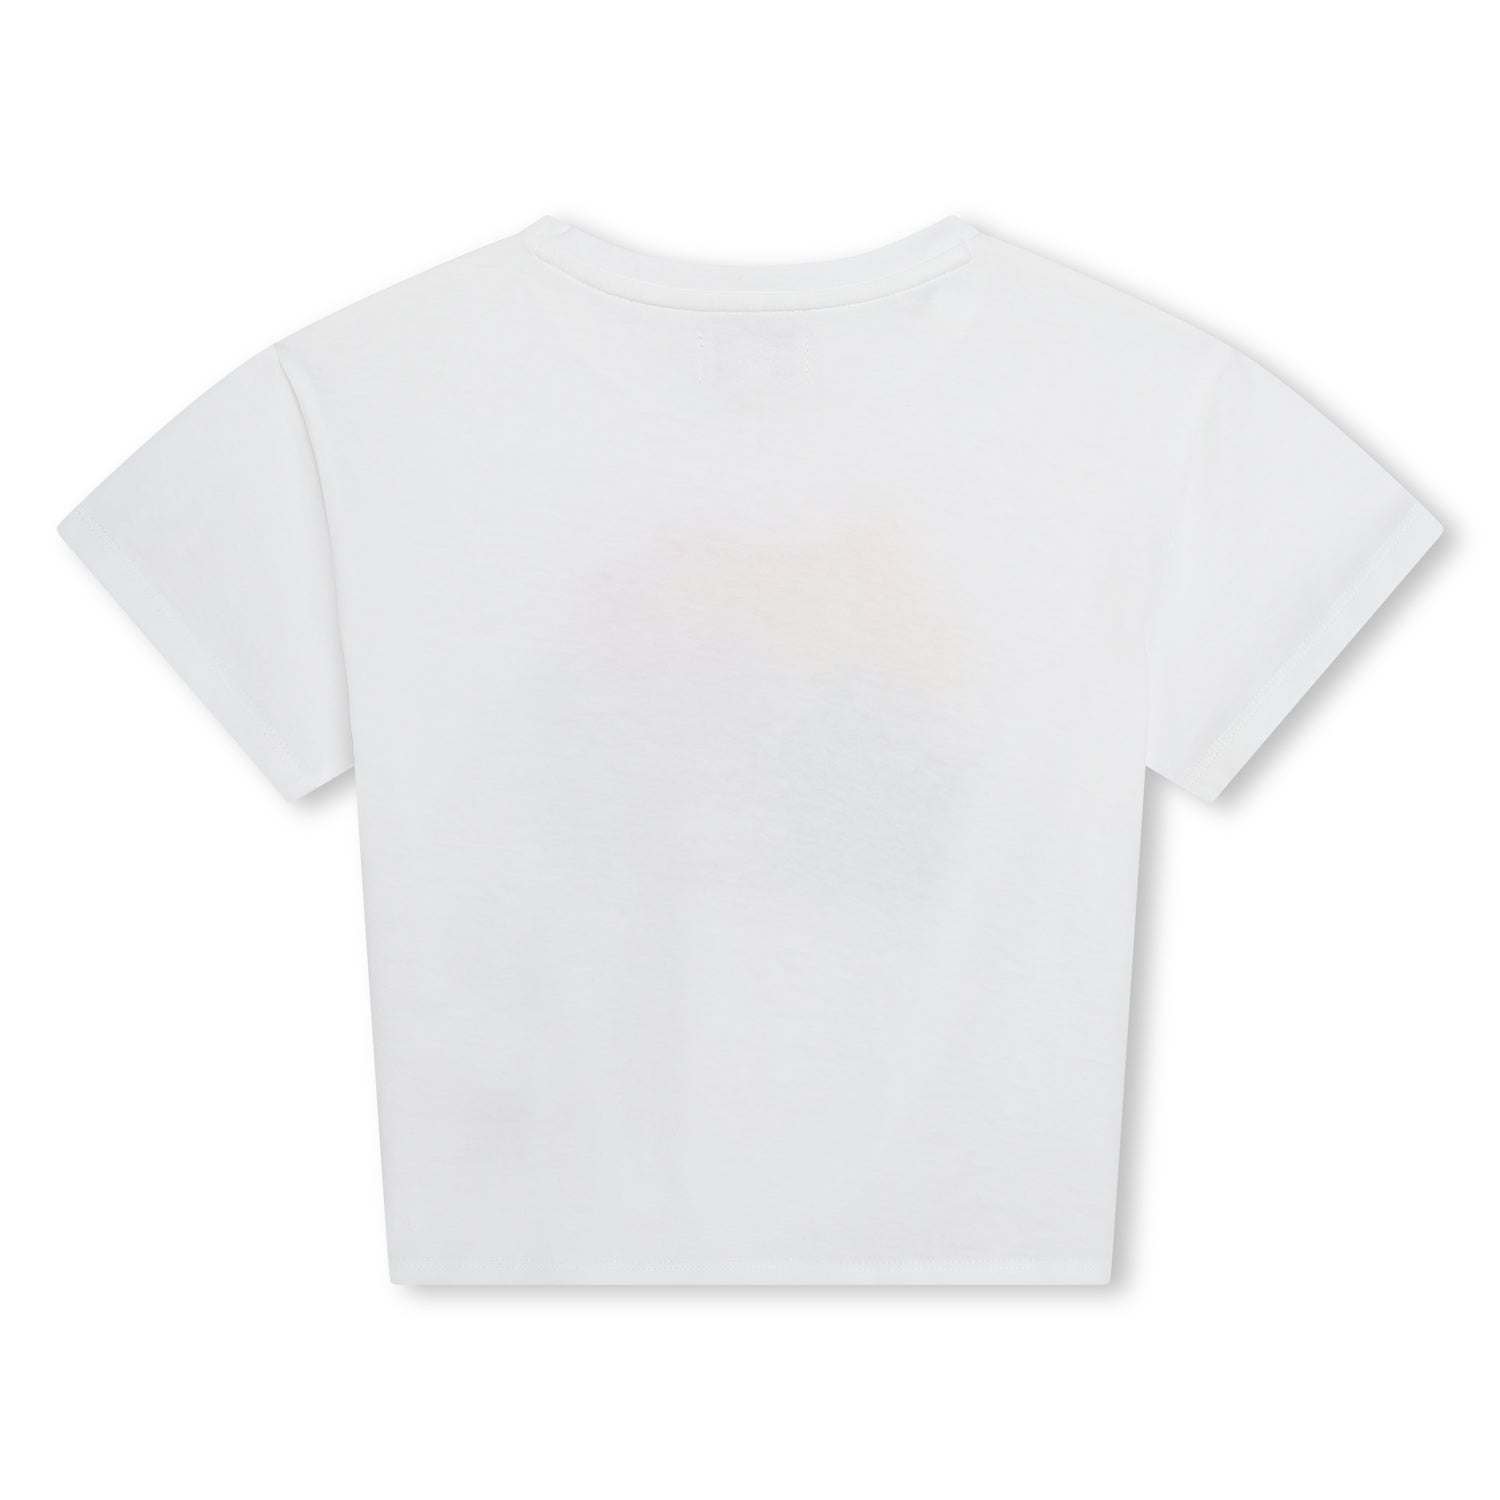 Sonia Rykiel White Logo Tee Shirt